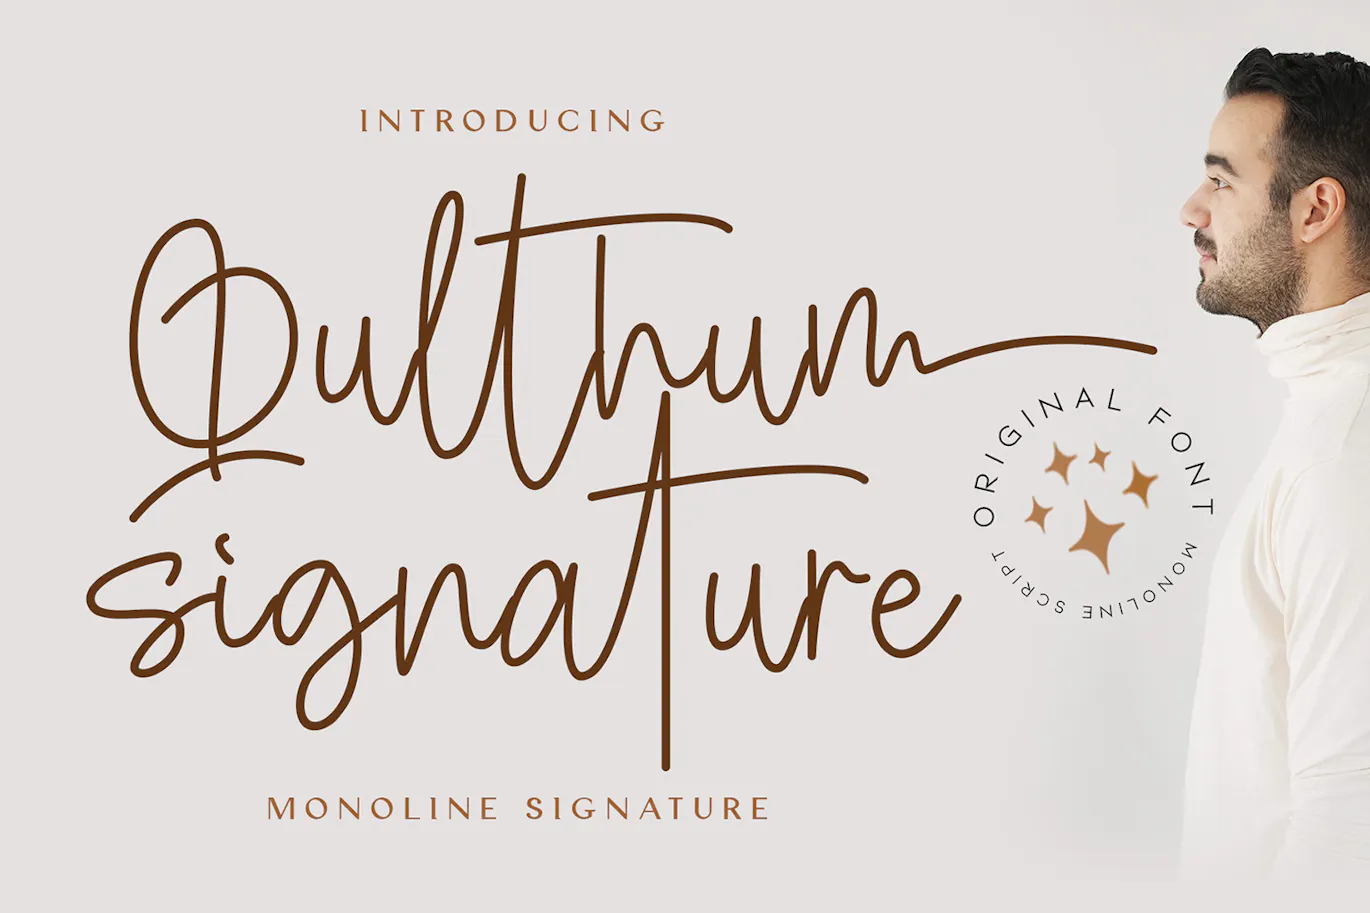 时尚优雅的手写字体 - Qulthum Signature